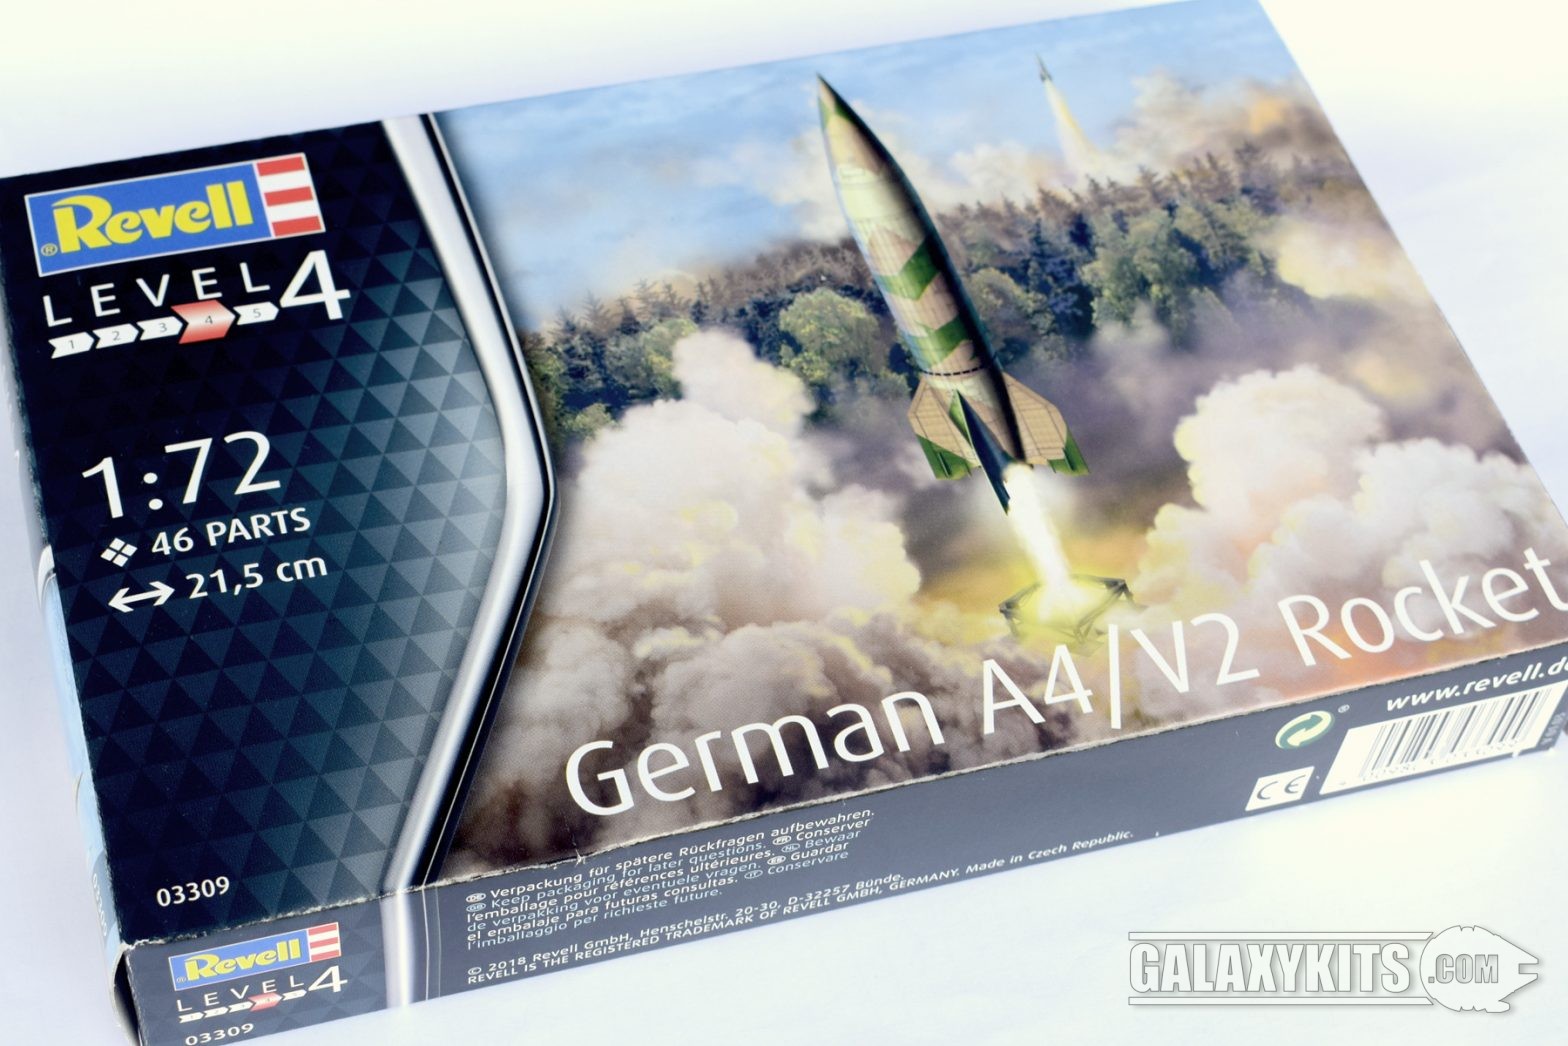 german-a4-v2-rocket_1-72_revell_1-1568x1